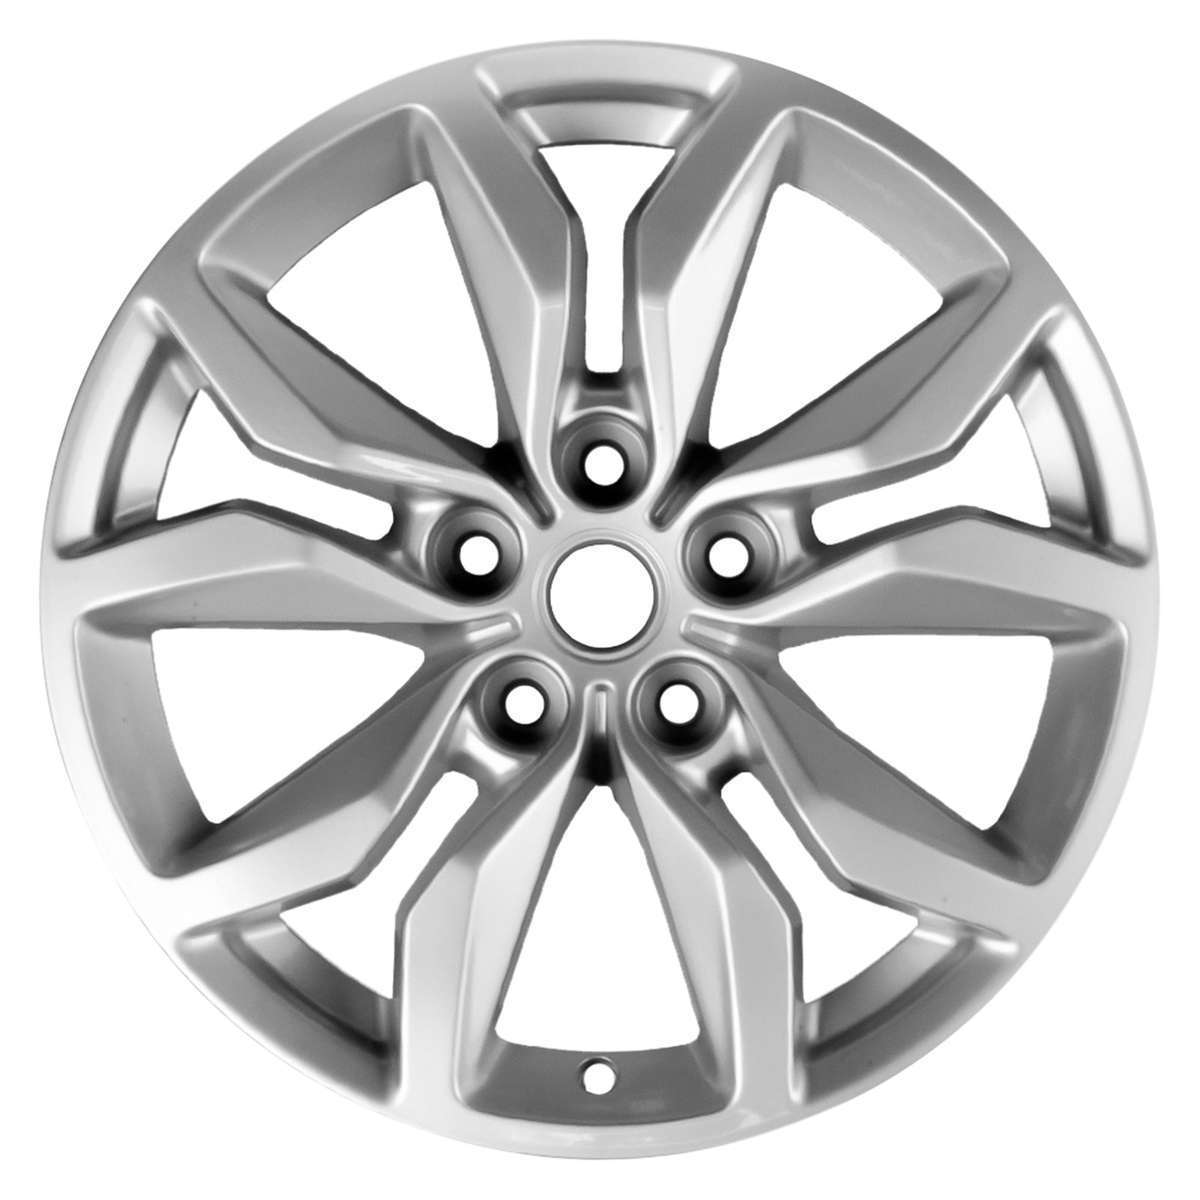 2017 Chevrolet Impala New 18" Replacement Wheel Rim RW5712S